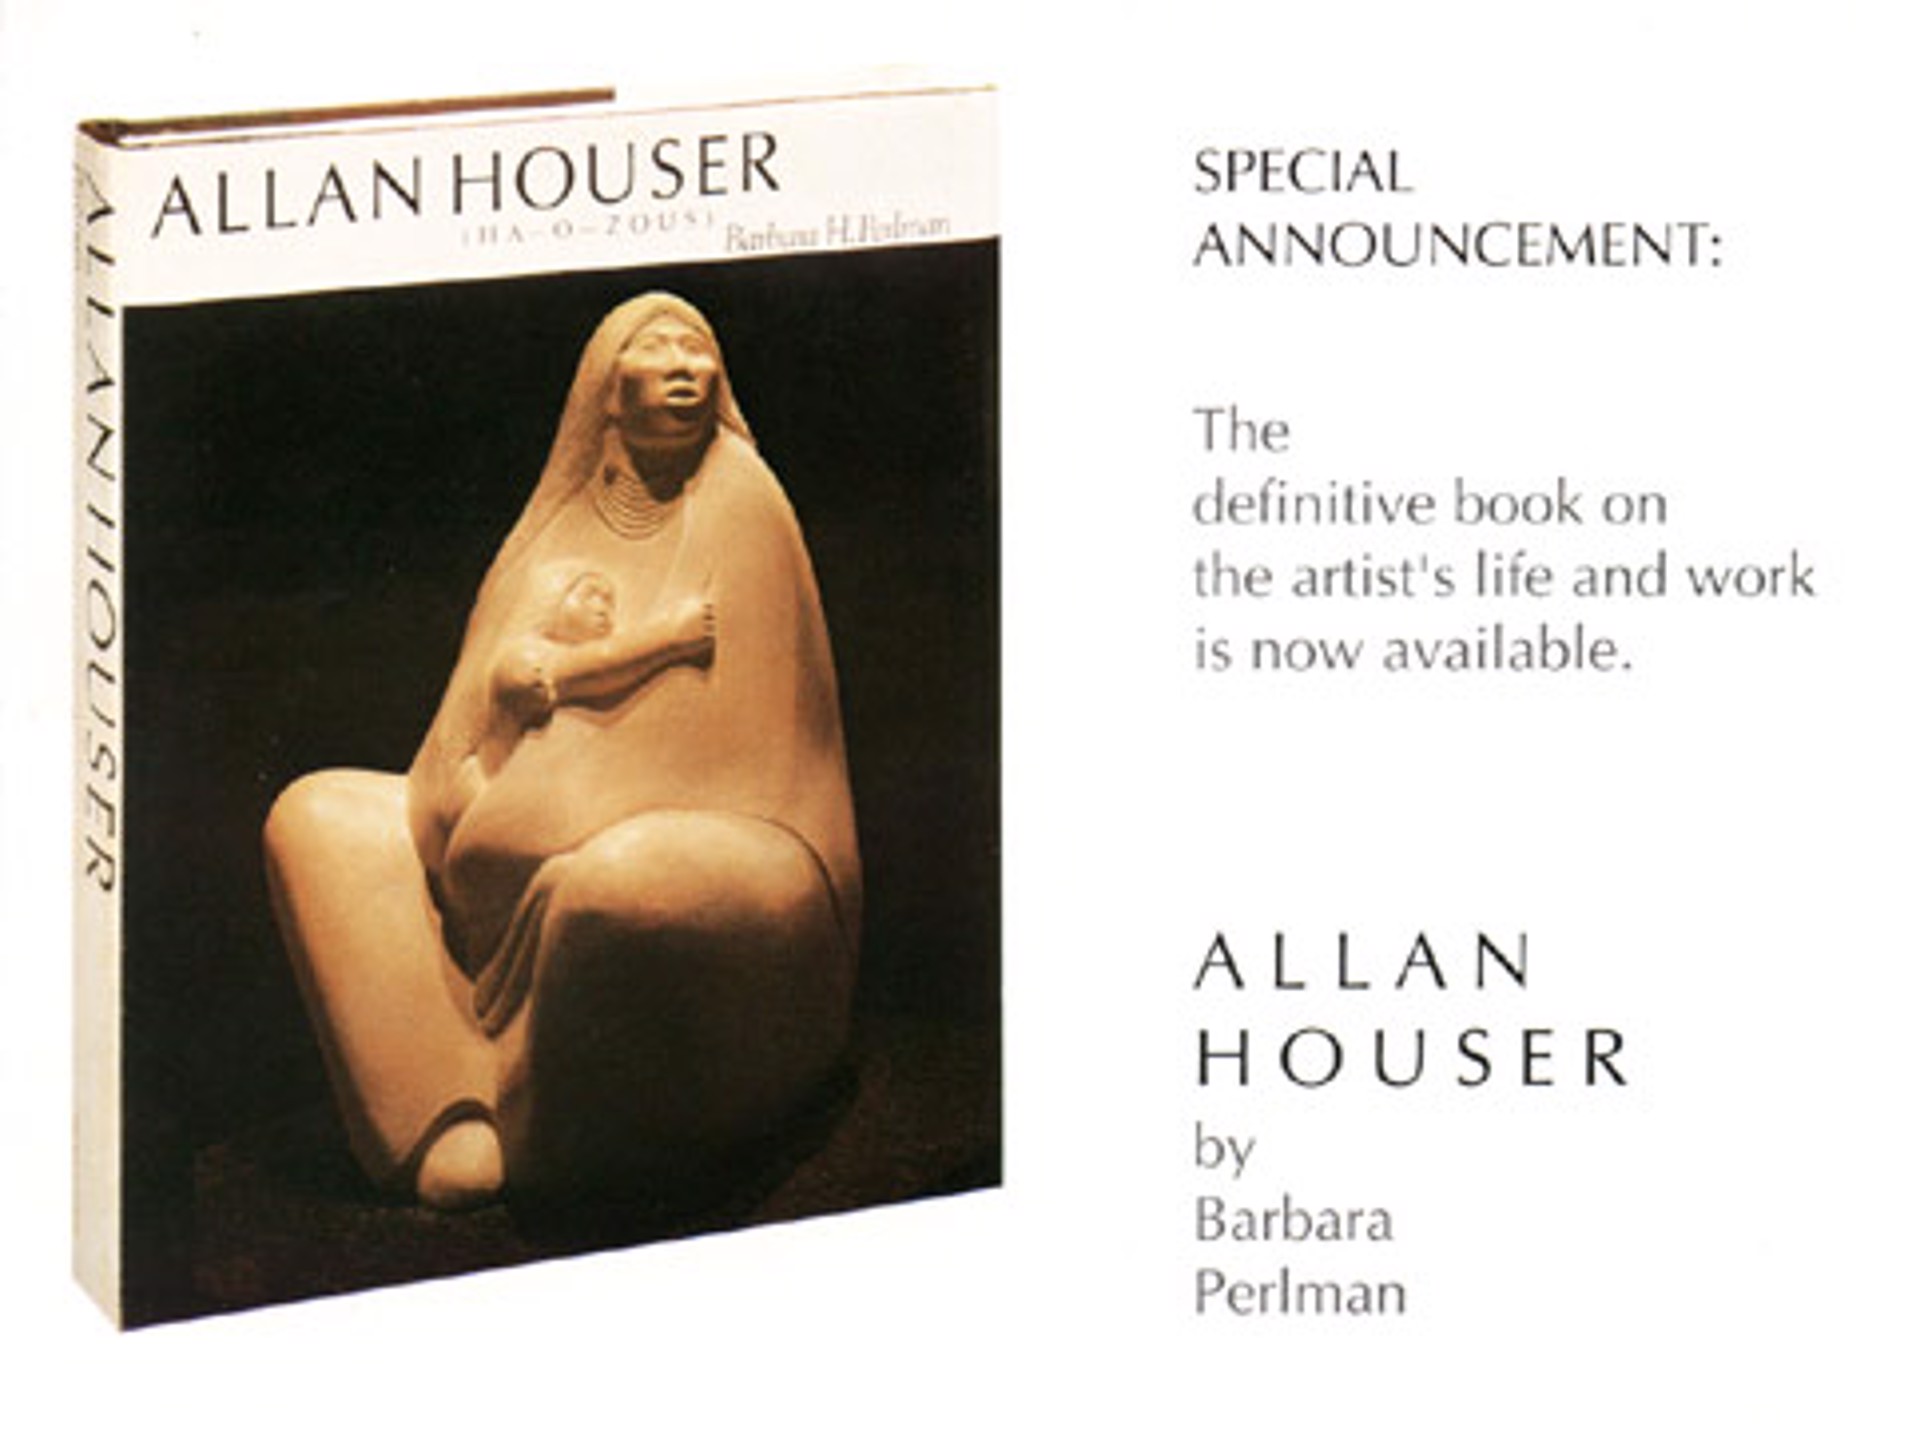 Allan Houser (Haozous) by Barbara Perlman by Allan Houser